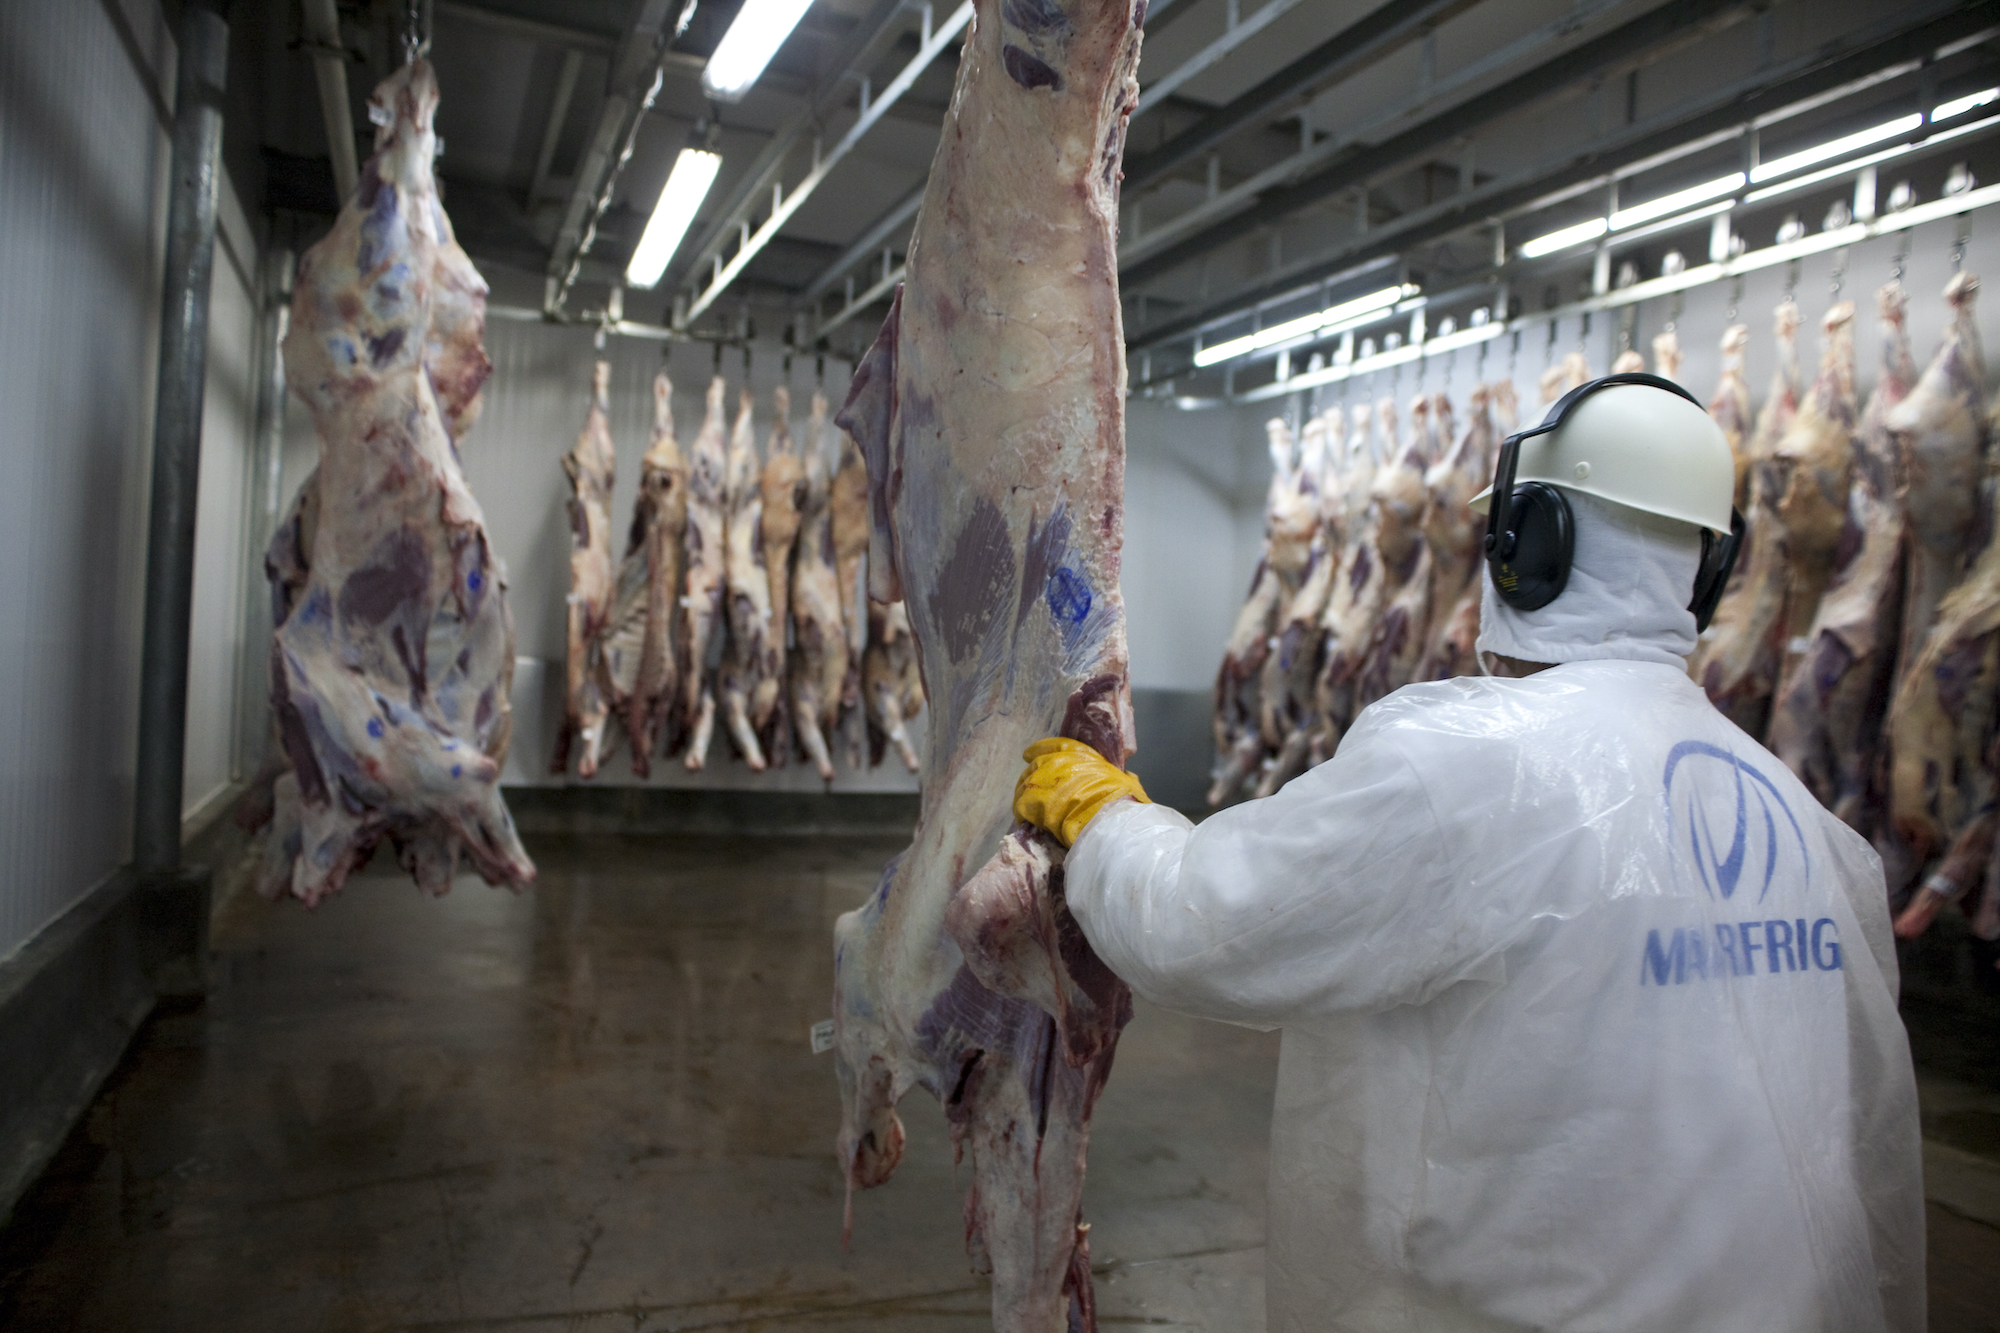 <p>La demanda china de carne brasileña aumenta las ganancias, pero preocupa a los ambientalistas. (Imagen: © <a href="https://media.greenpeace.org/archive/Marfrig-Slaughterhouse-Facilities-in-Brazil-27MZIFL23SR9.html">Ricardo Funari / Greenpeace</a>)</p>